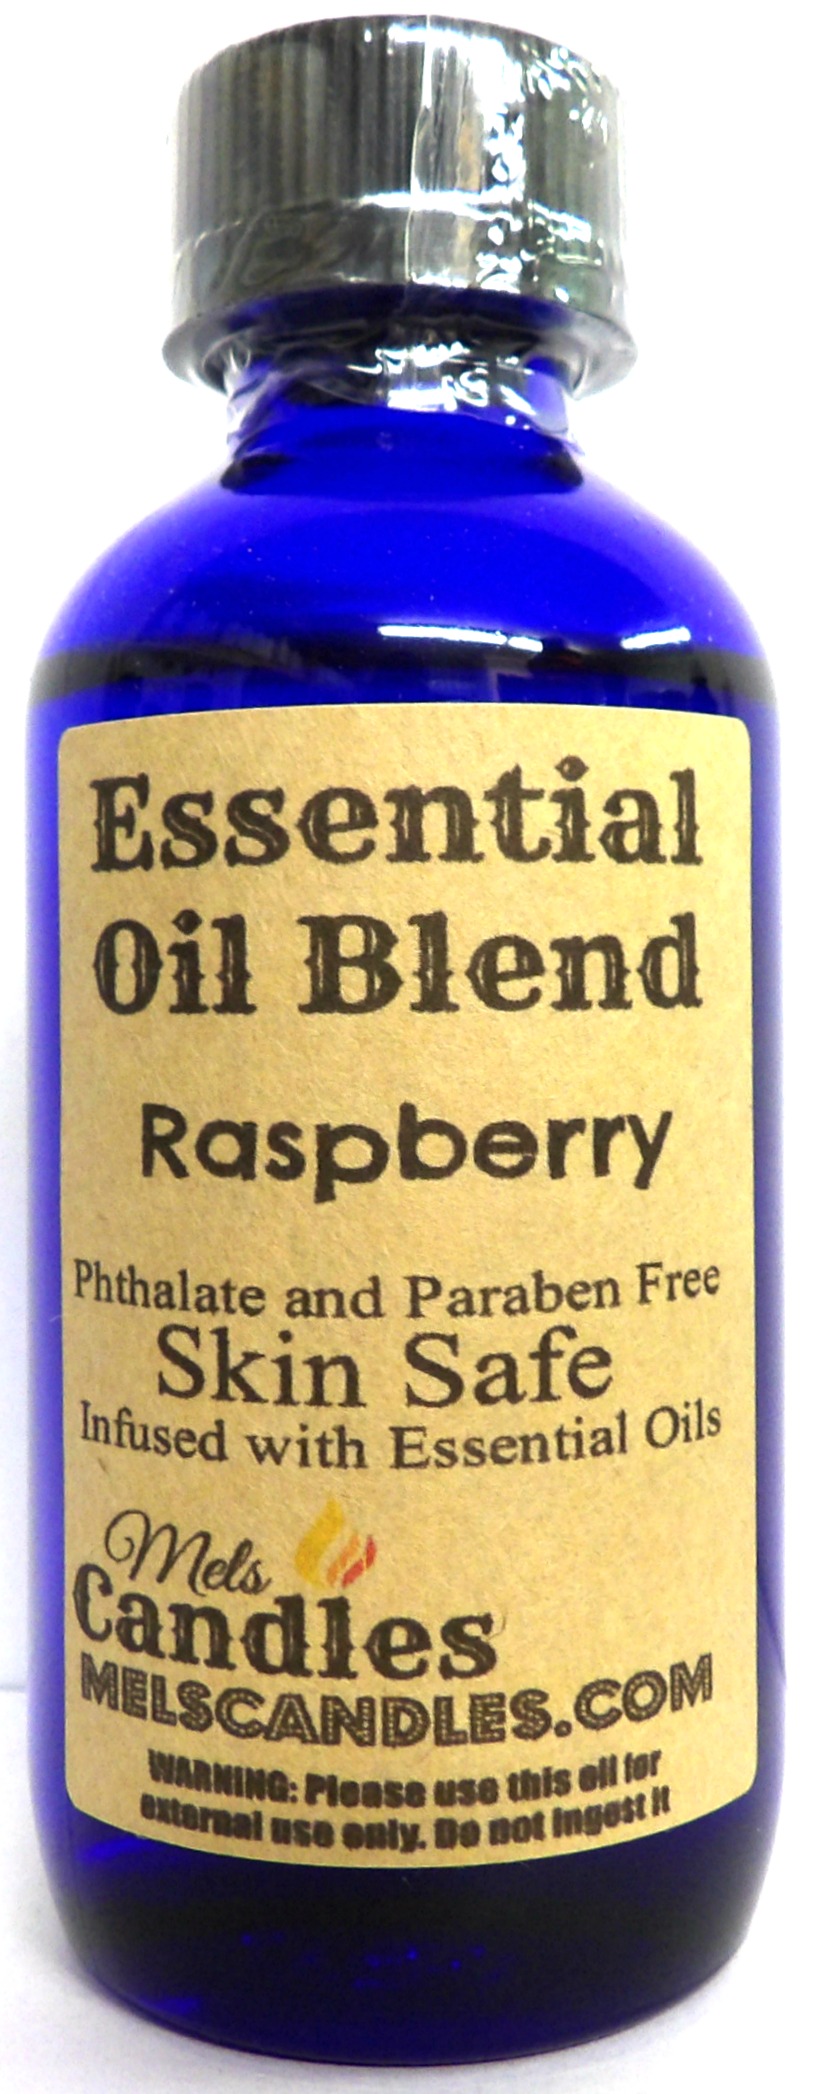 Raspberry 4oz/118.29ml Blue Glass Bottle of Essential Oil Blend/Premium ...